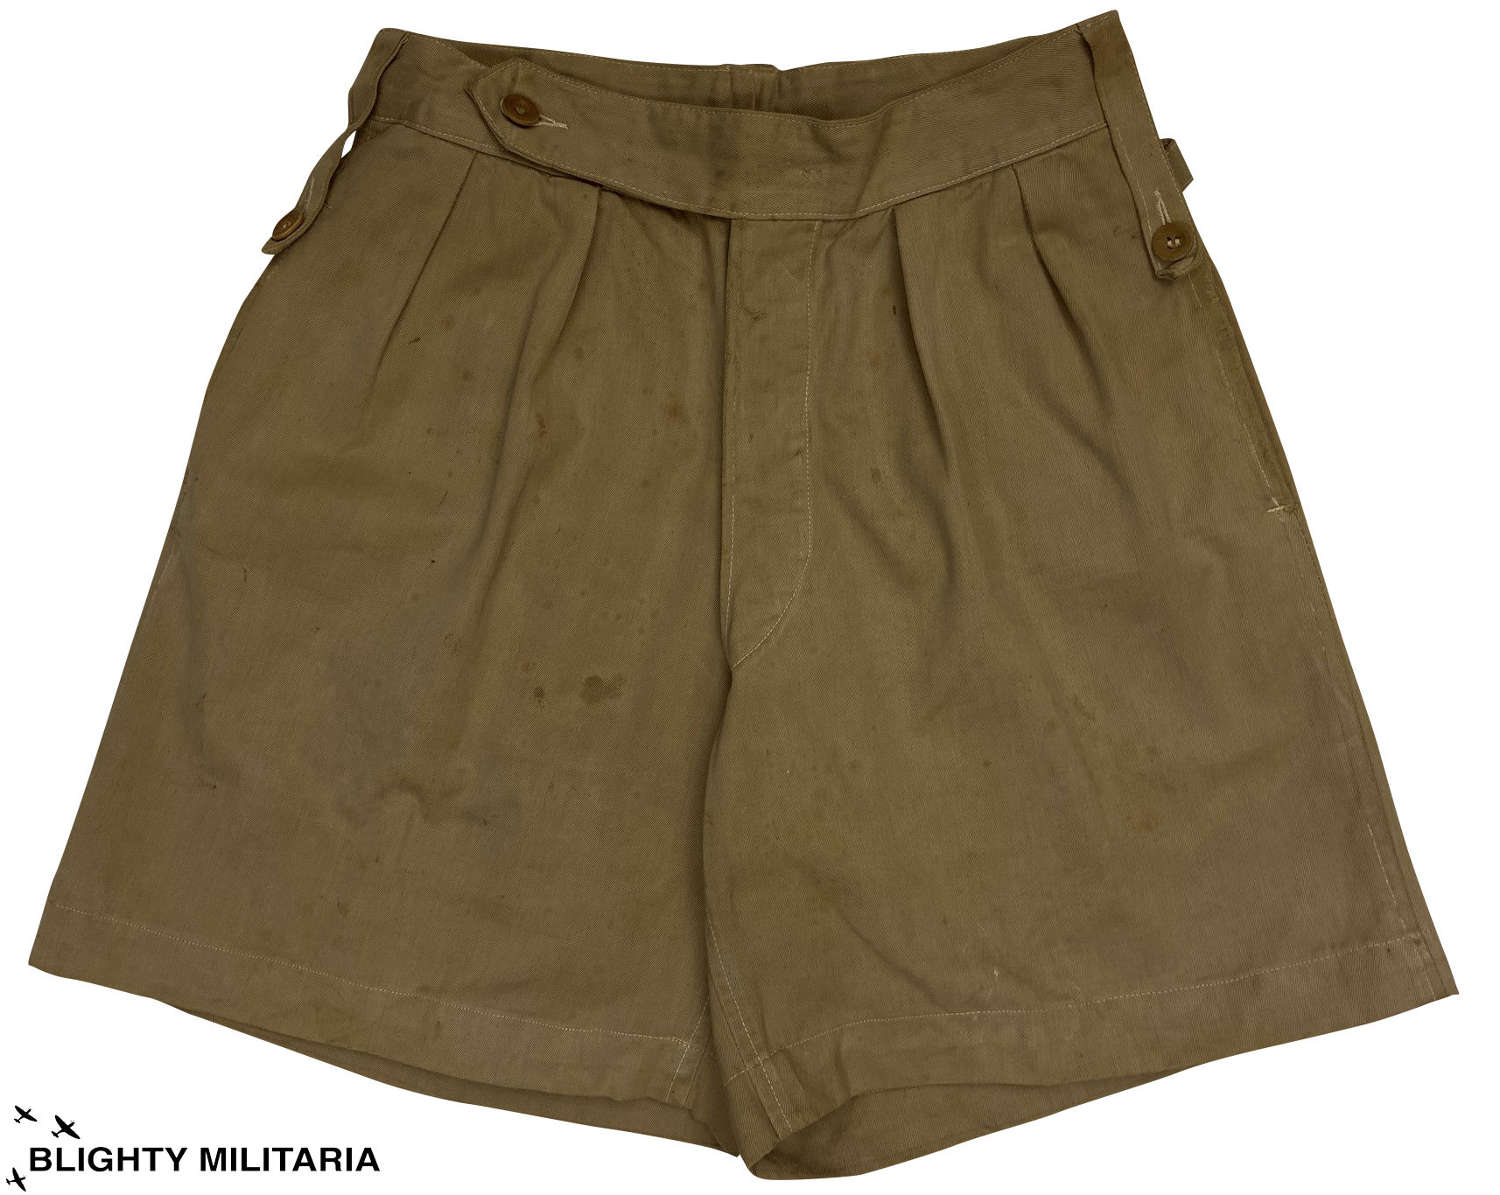 Original WW2 British Army Officers Khaki Drill Shorts - Major Lowe